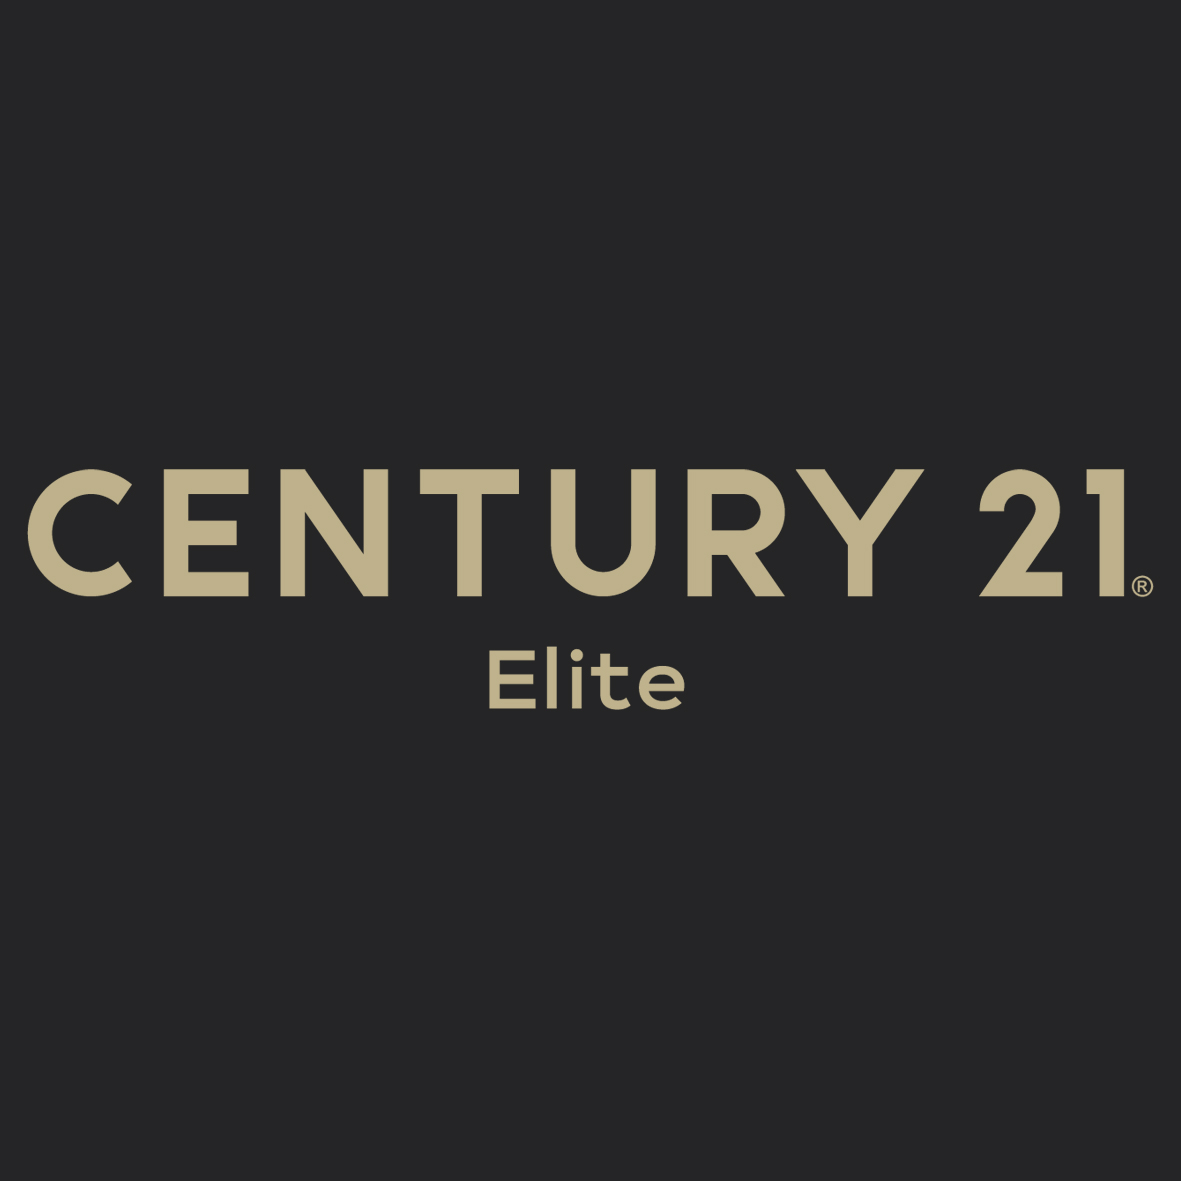 CENTURY 21 Elite